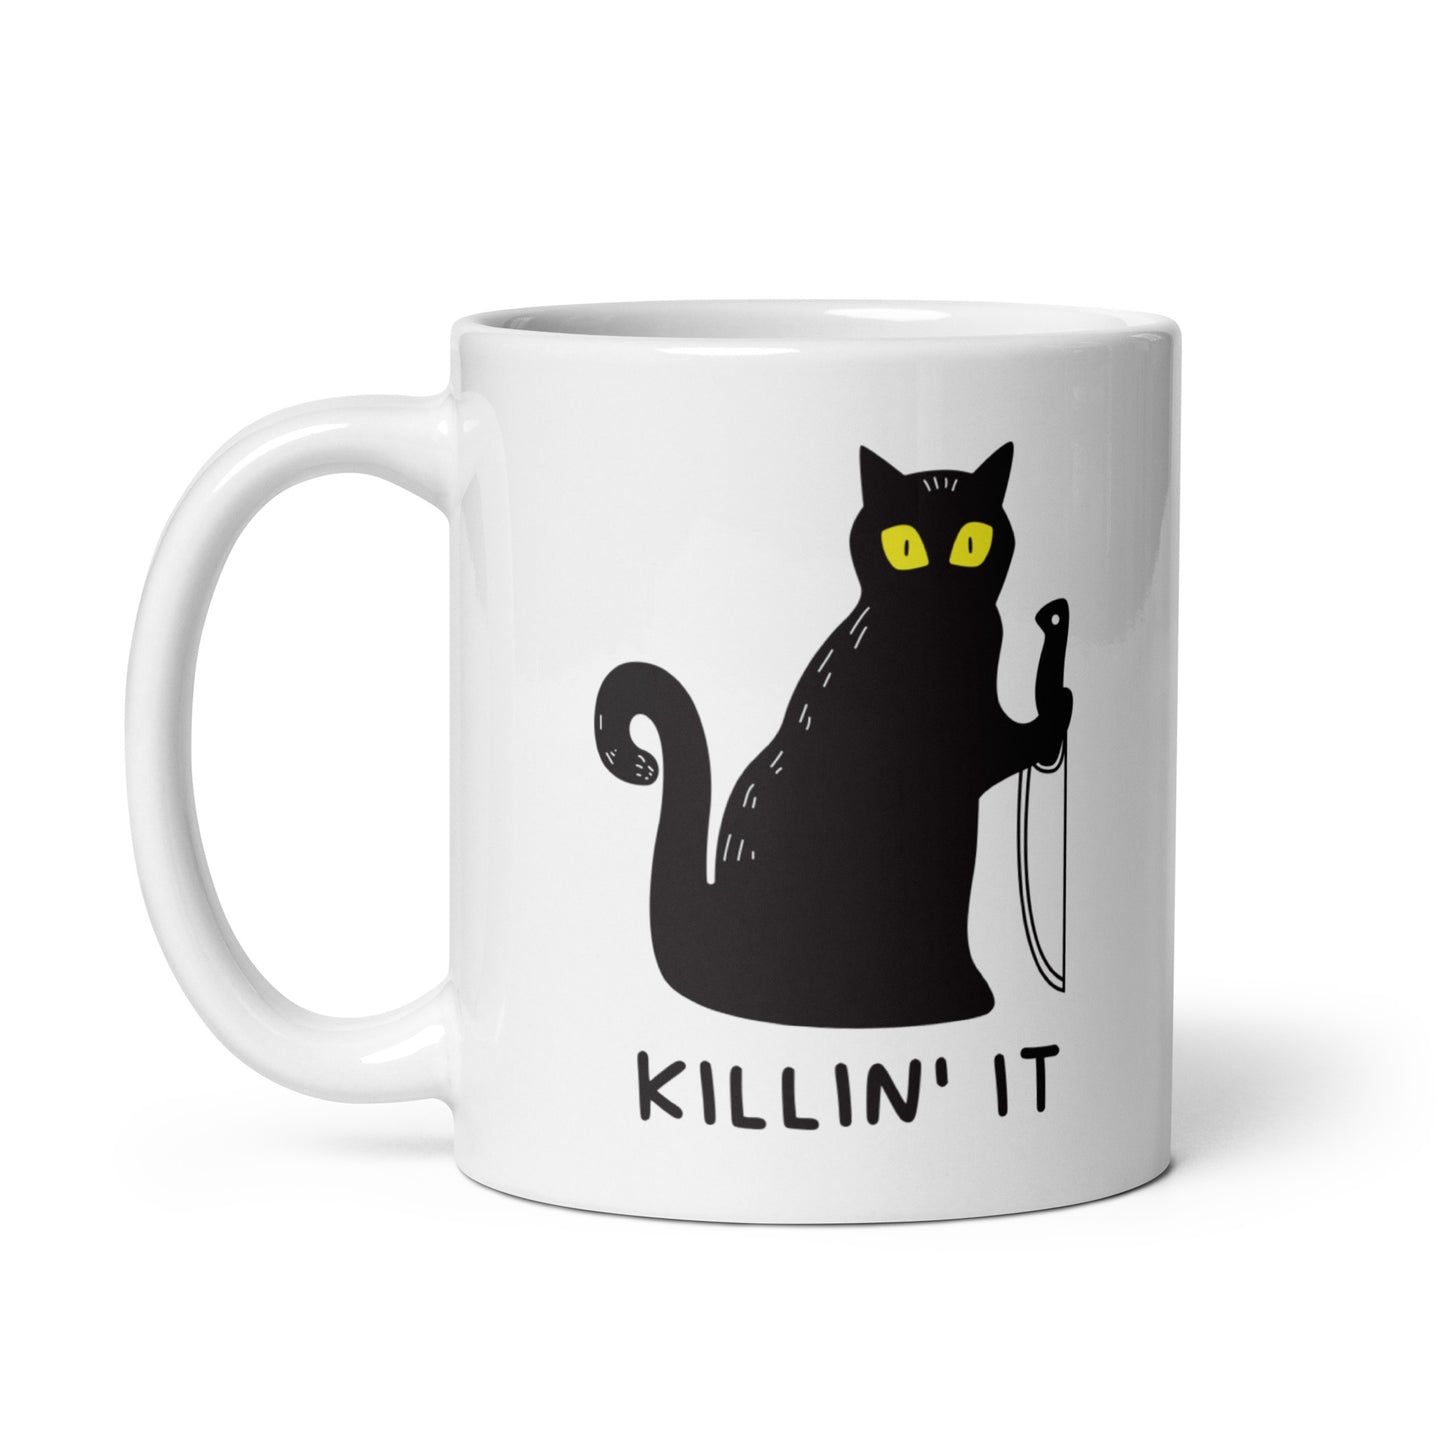 Killin' It mug